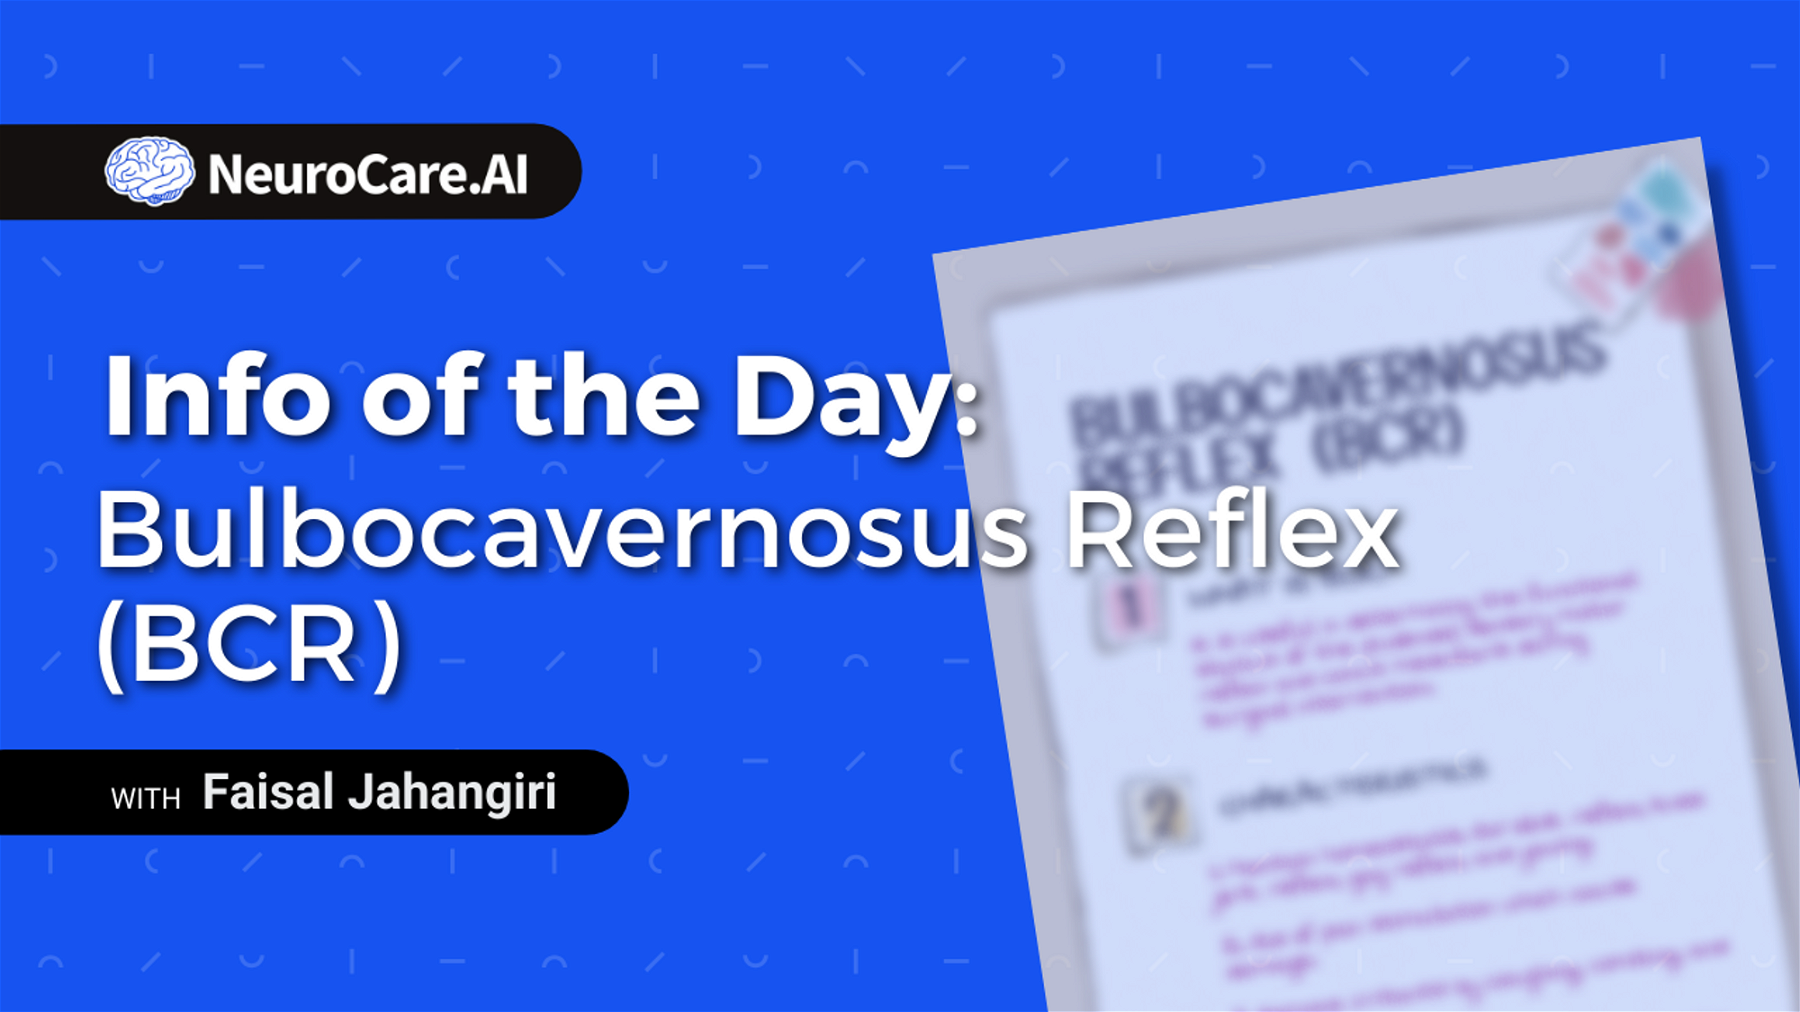 Info of the Day: "Bulbocavernosus Reflex (BCR)"